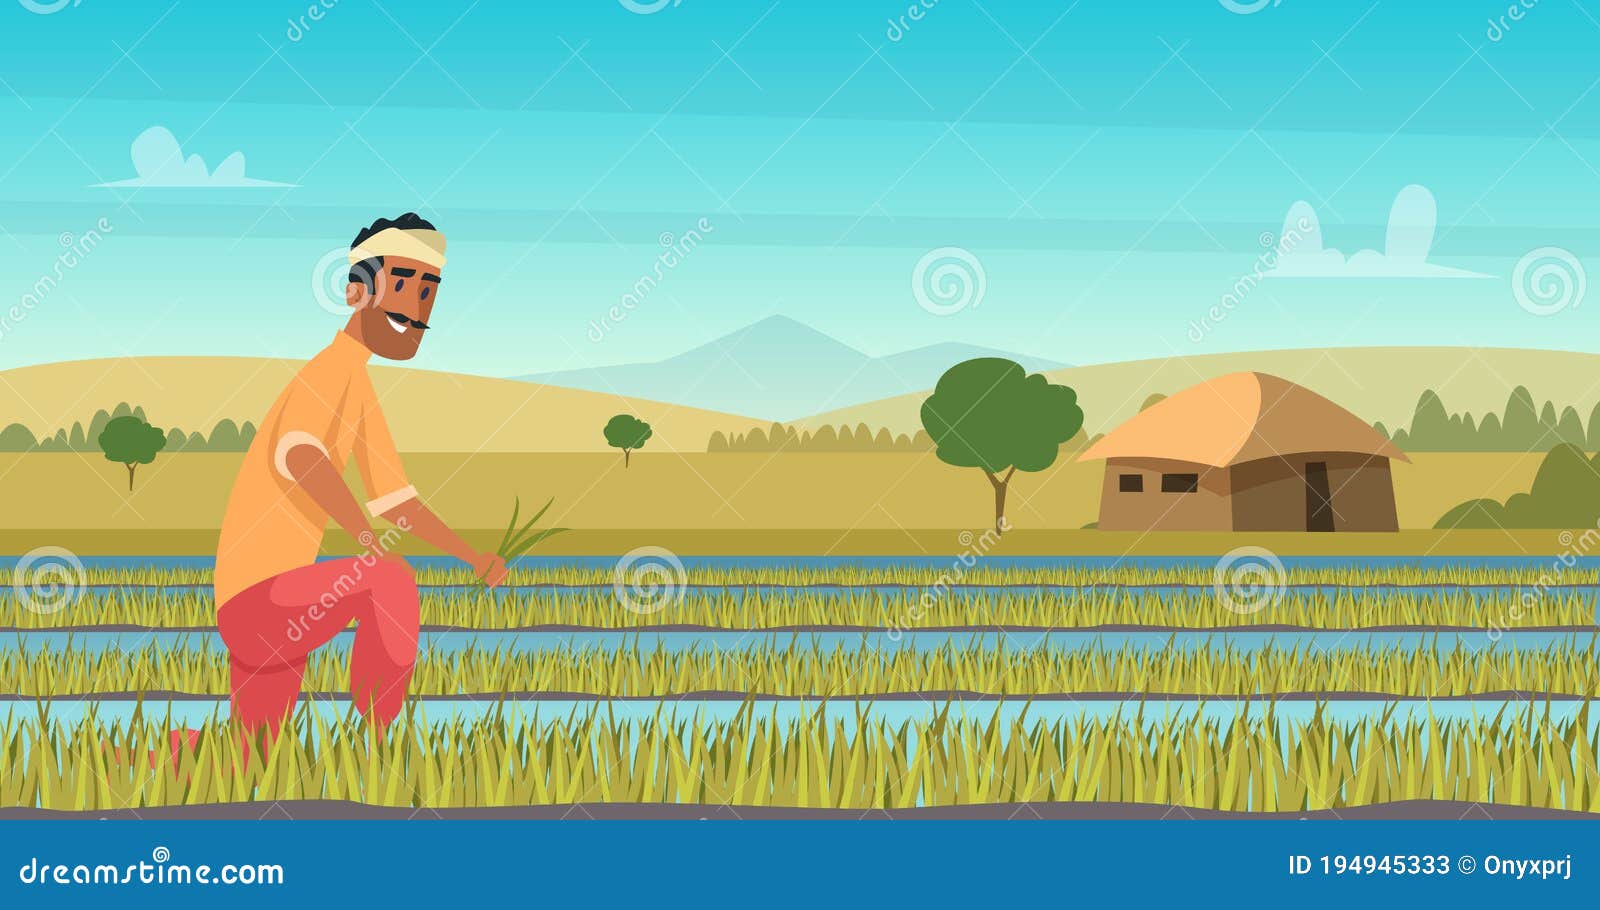 Indian Farmer Cartoon